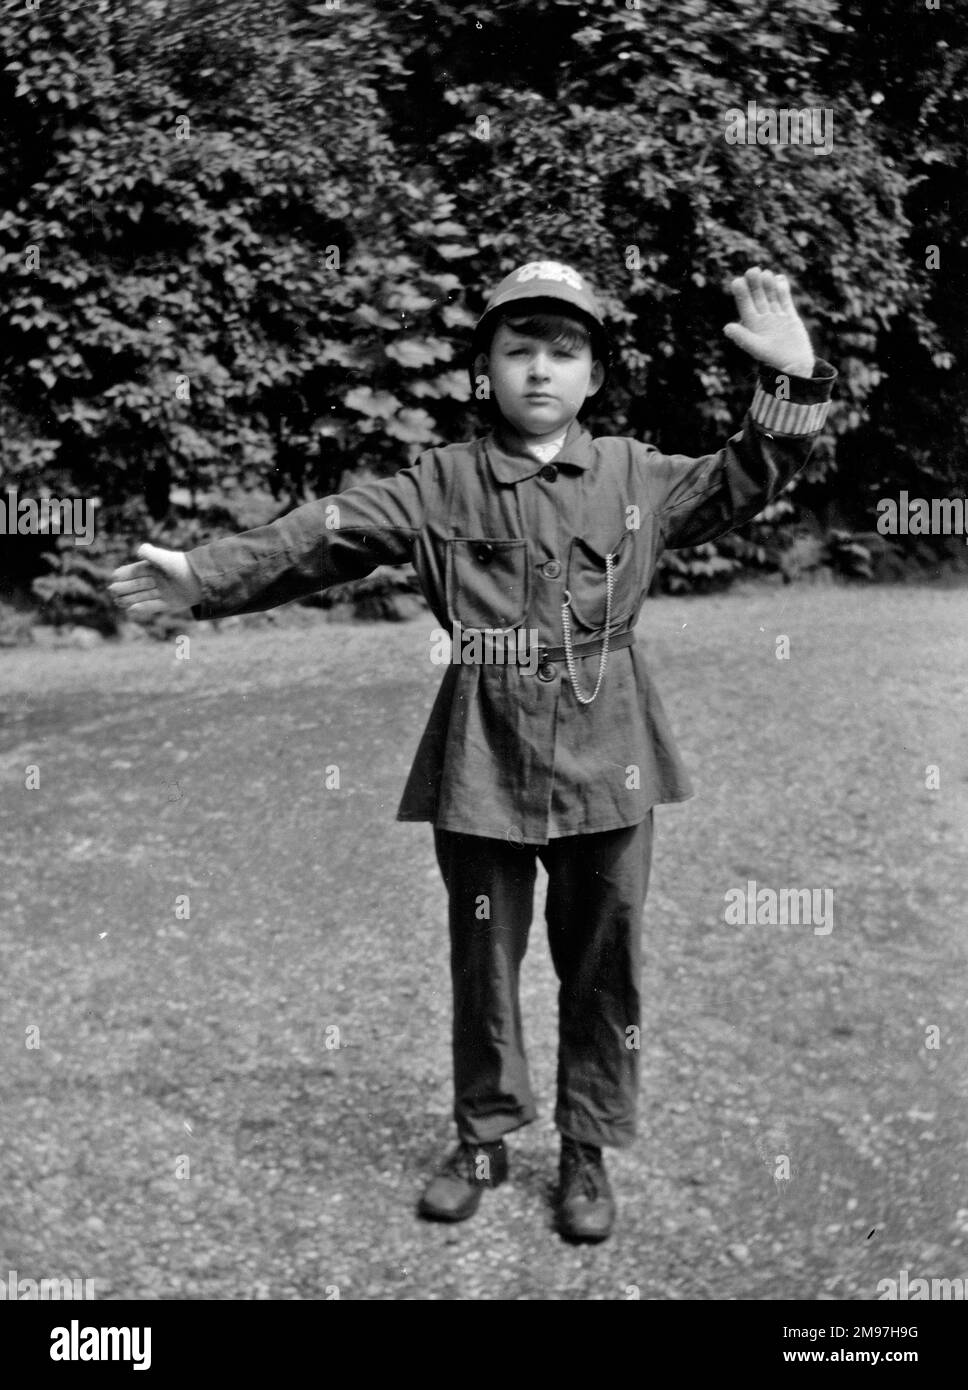 Boy in policeman's uniform in a garden, pretending to direct traffic. Stock Photo